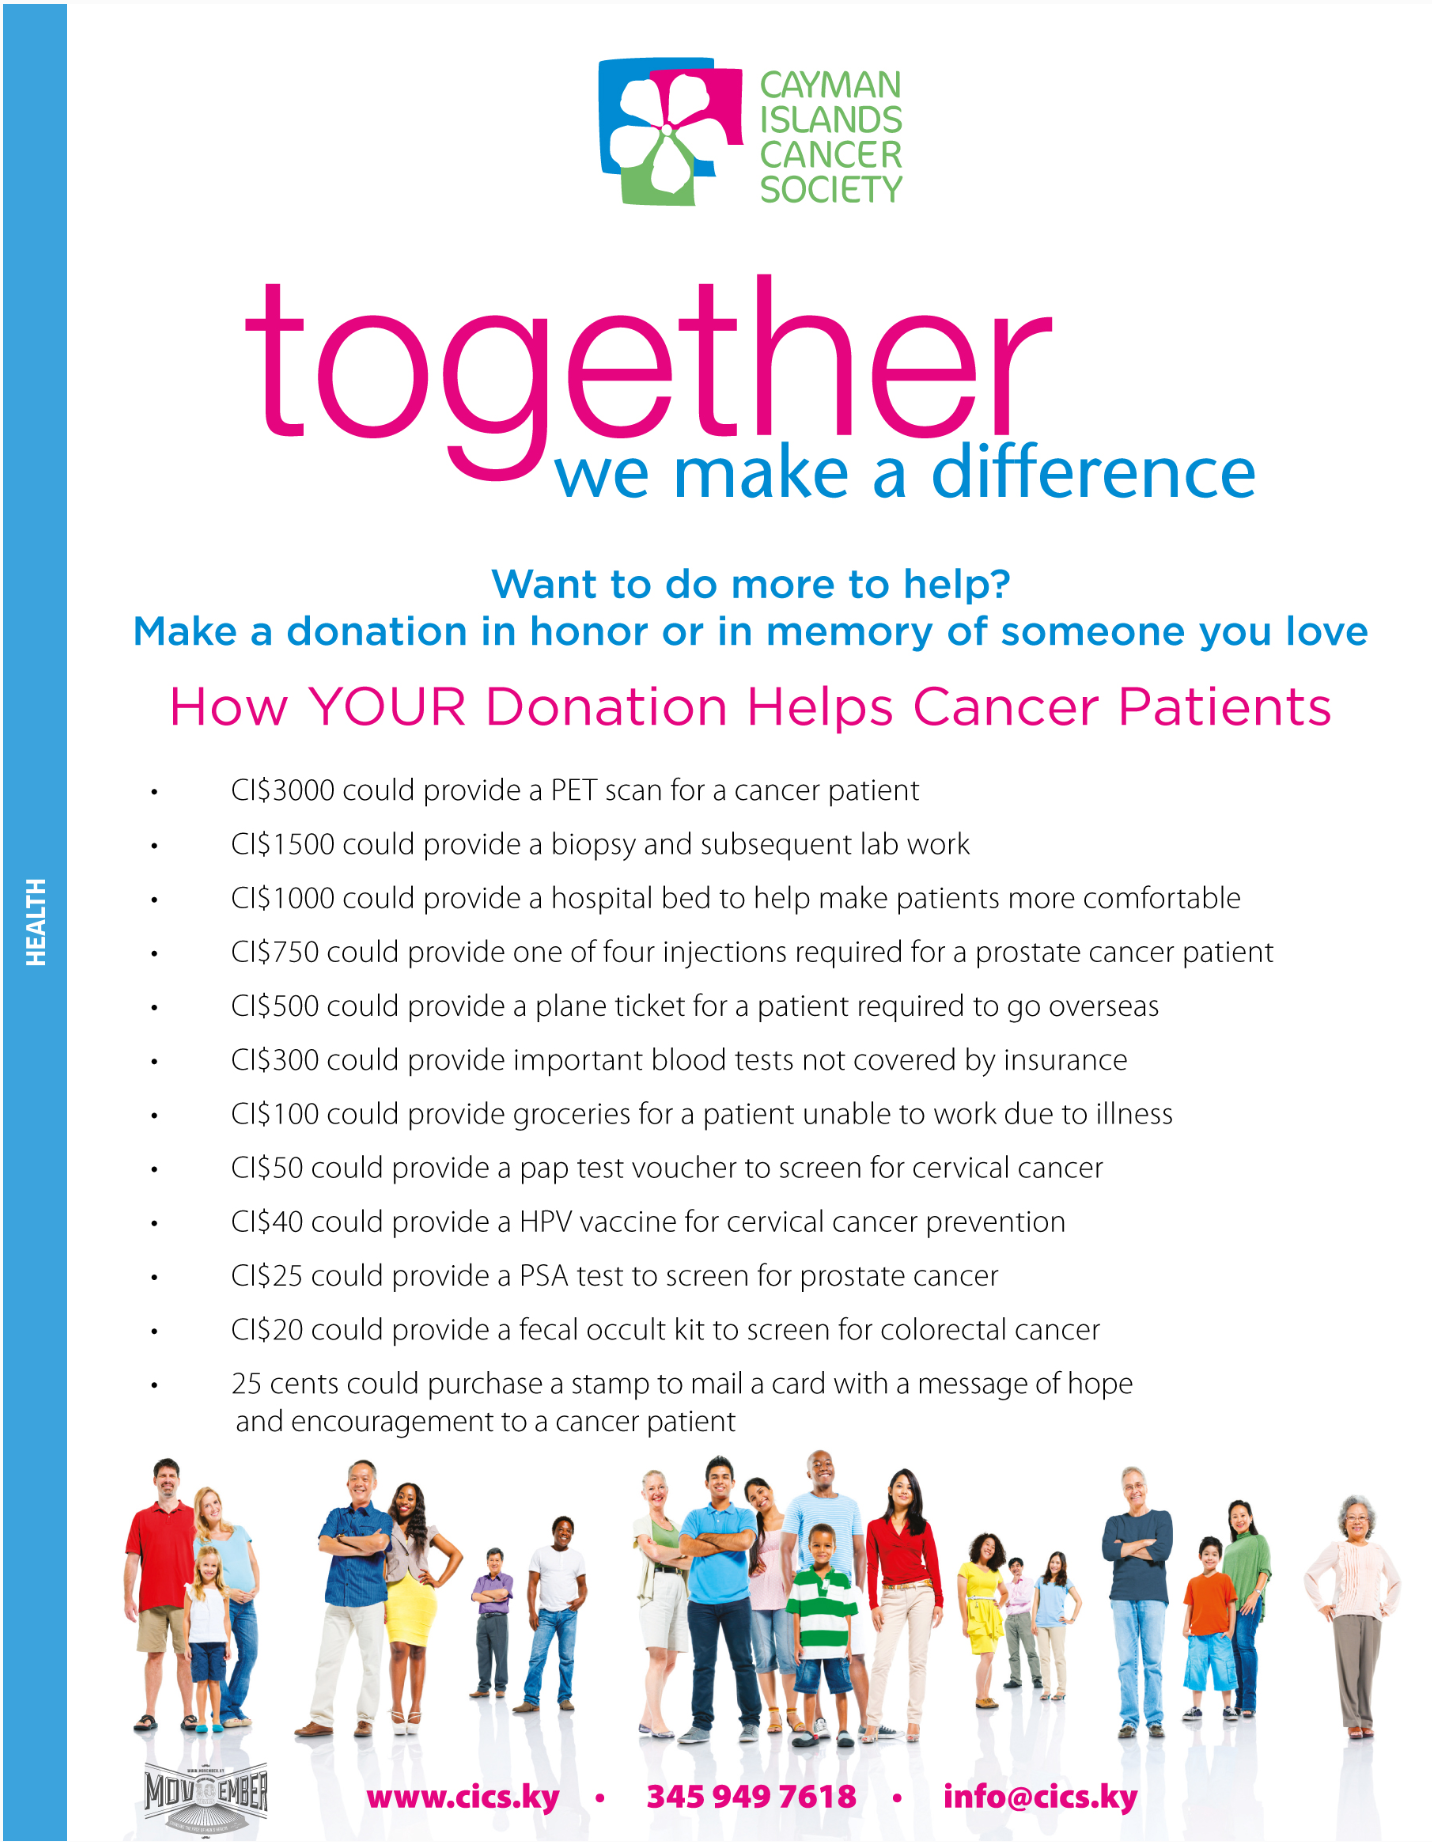 Cayman Islands Cancer Society - Charitable Organisations